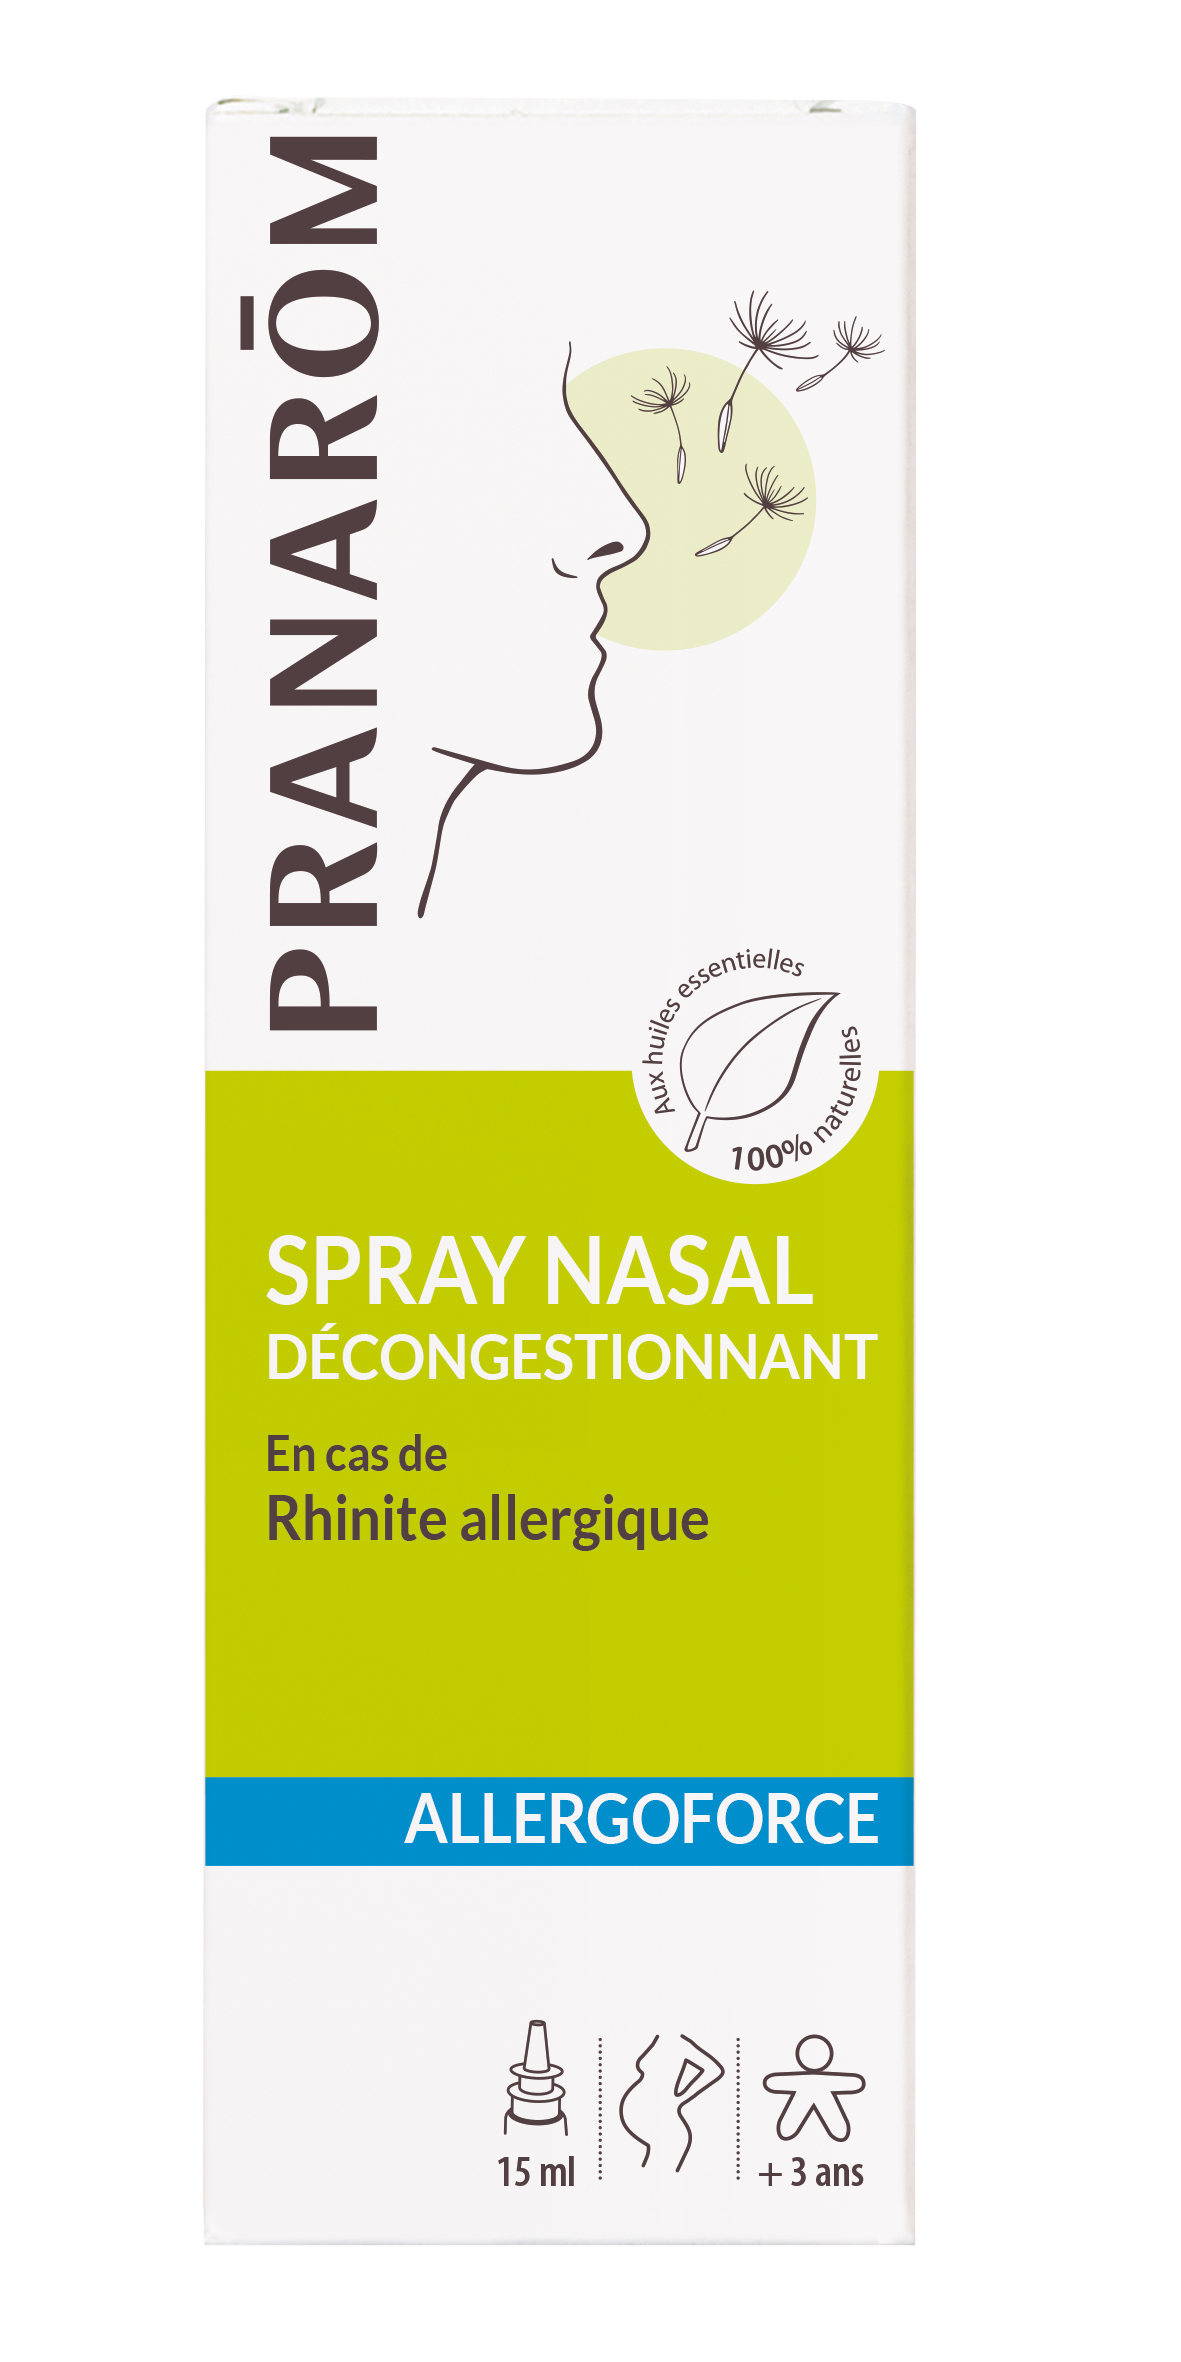 image Allergoforce Spray Nasal Décongestionnant (12 produits)